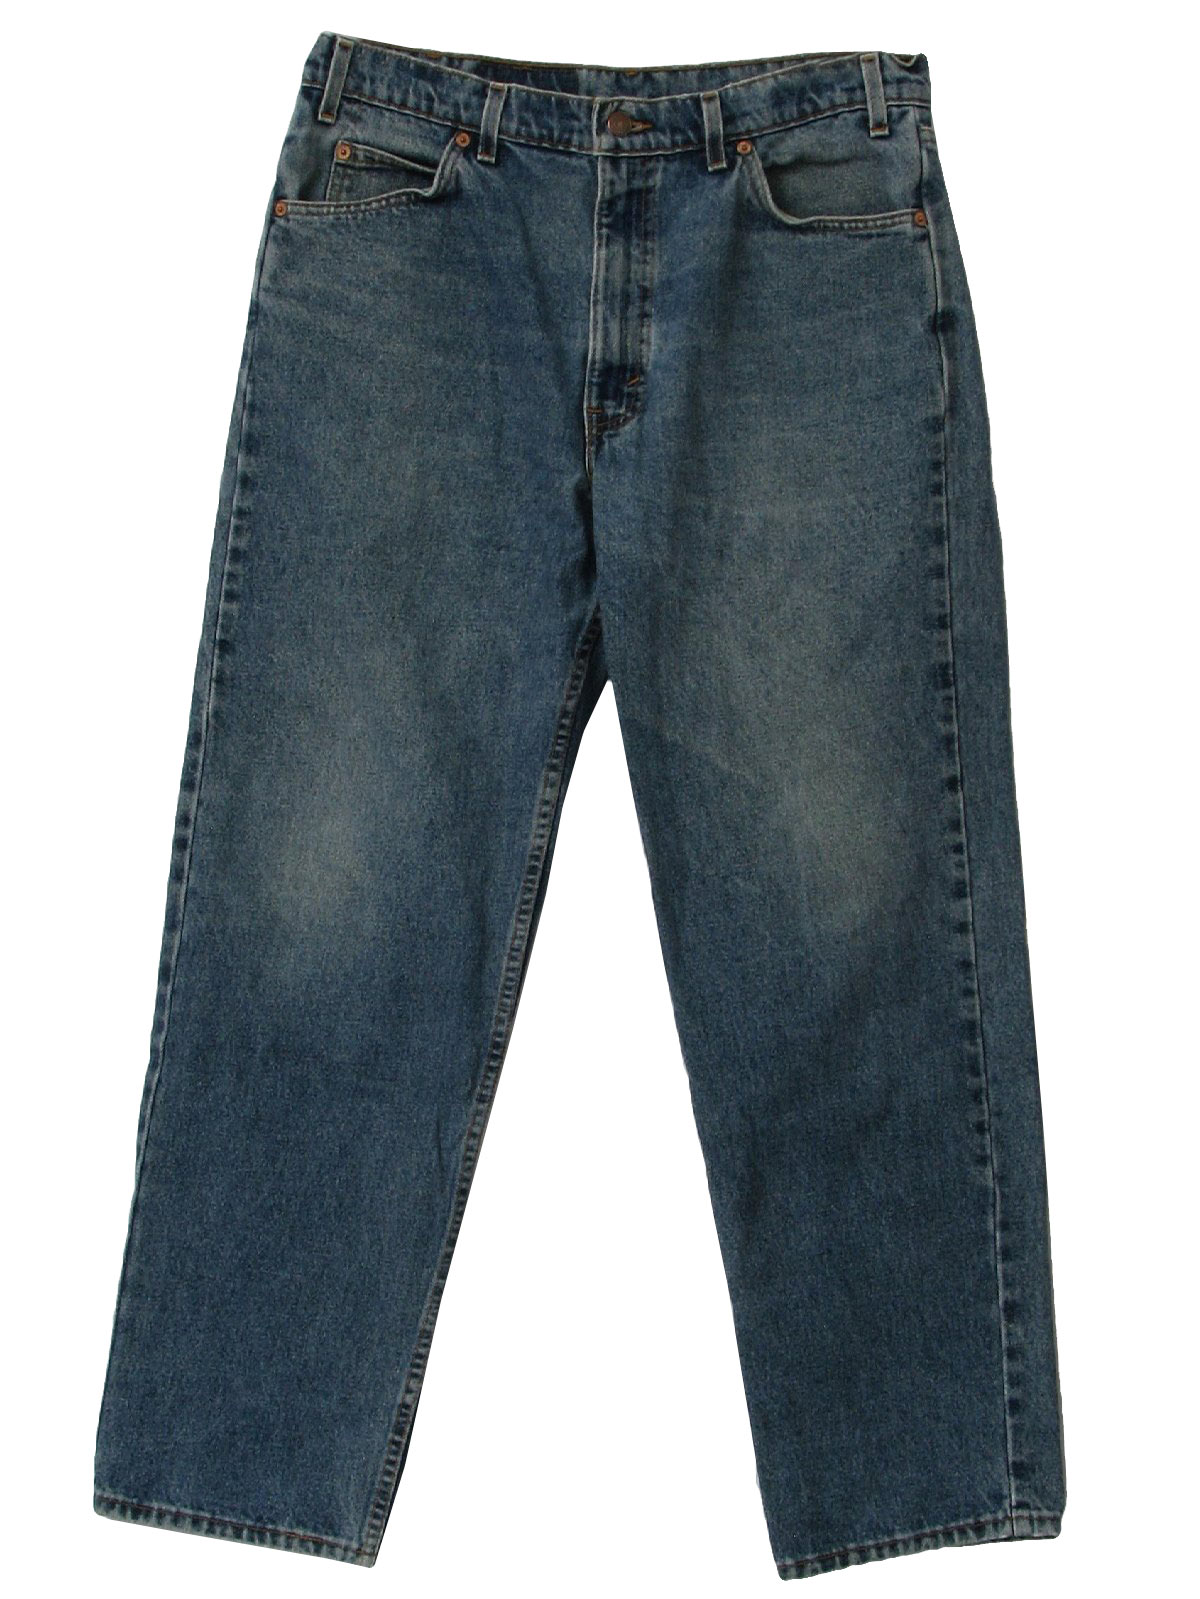 Nineties Vintage Pants: 90s -Levis 550- Mens faded light blue denim ...